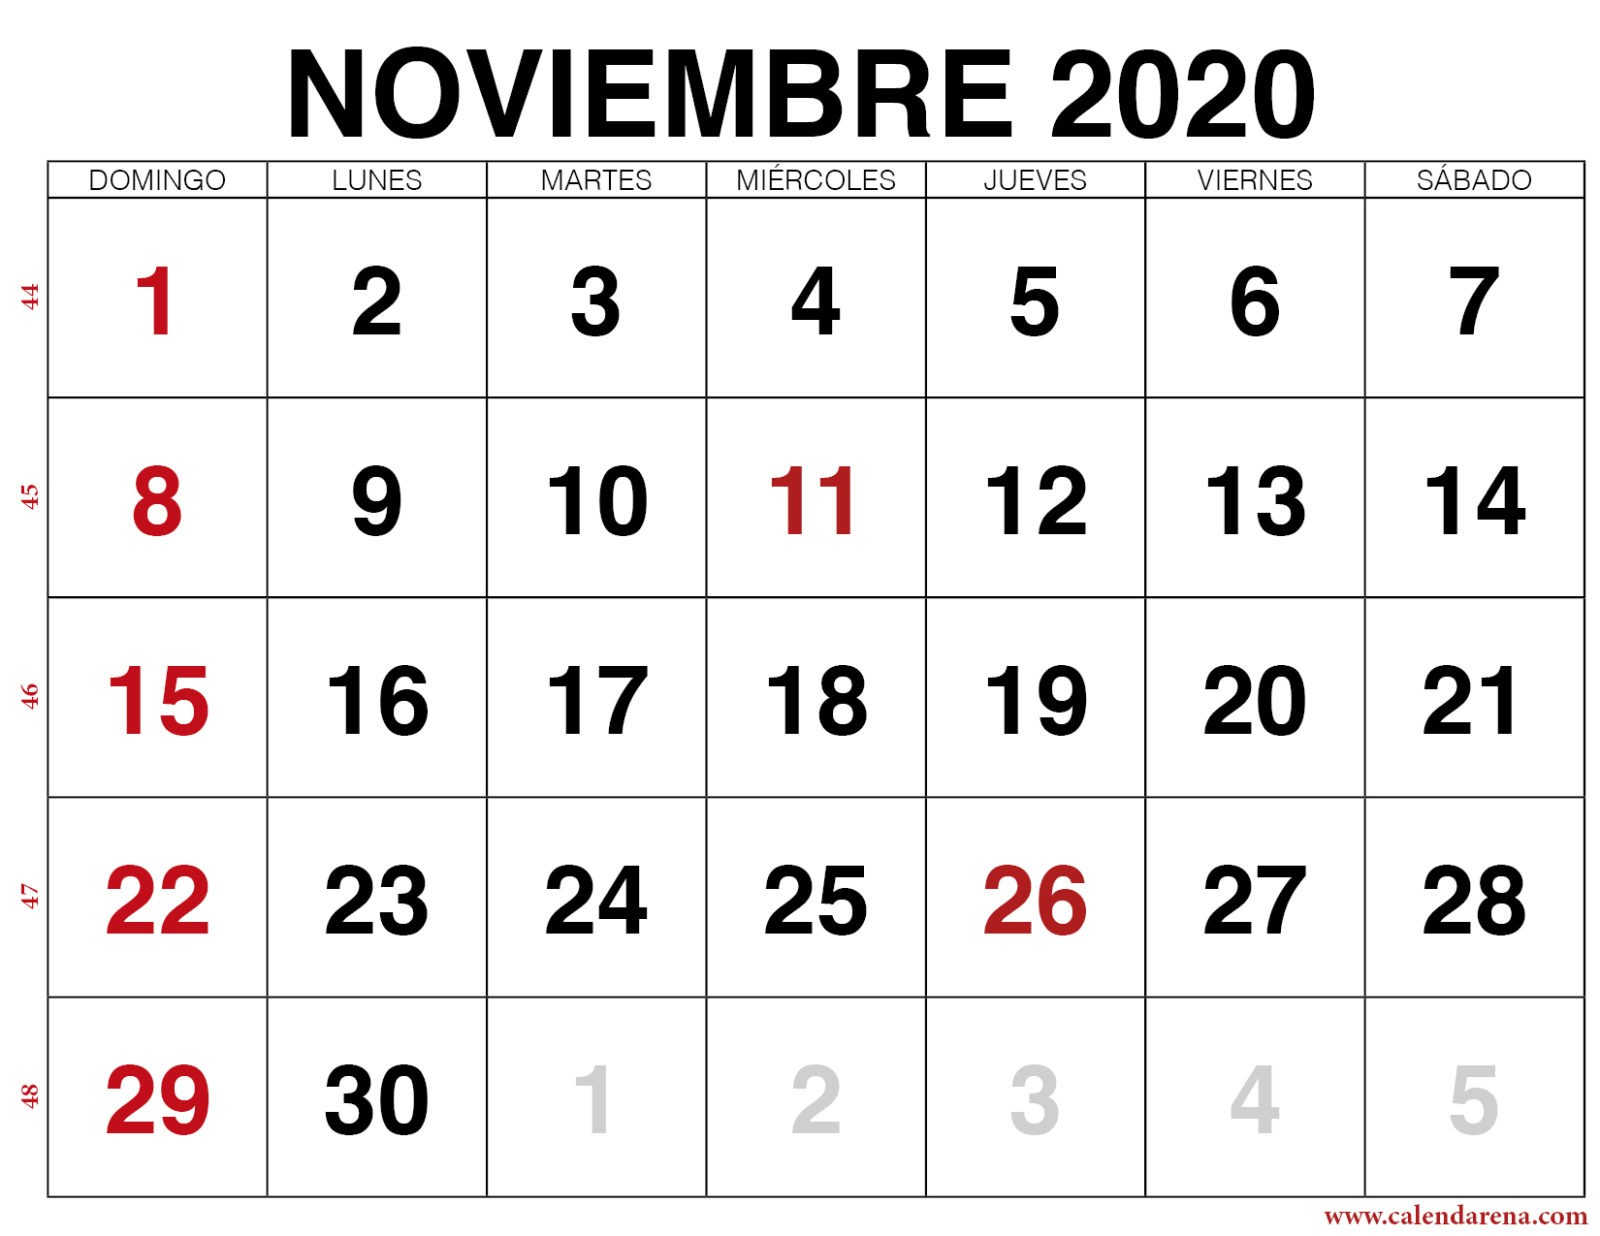 Calendario Noviembre 2020 Para Imprimir - Calendarena